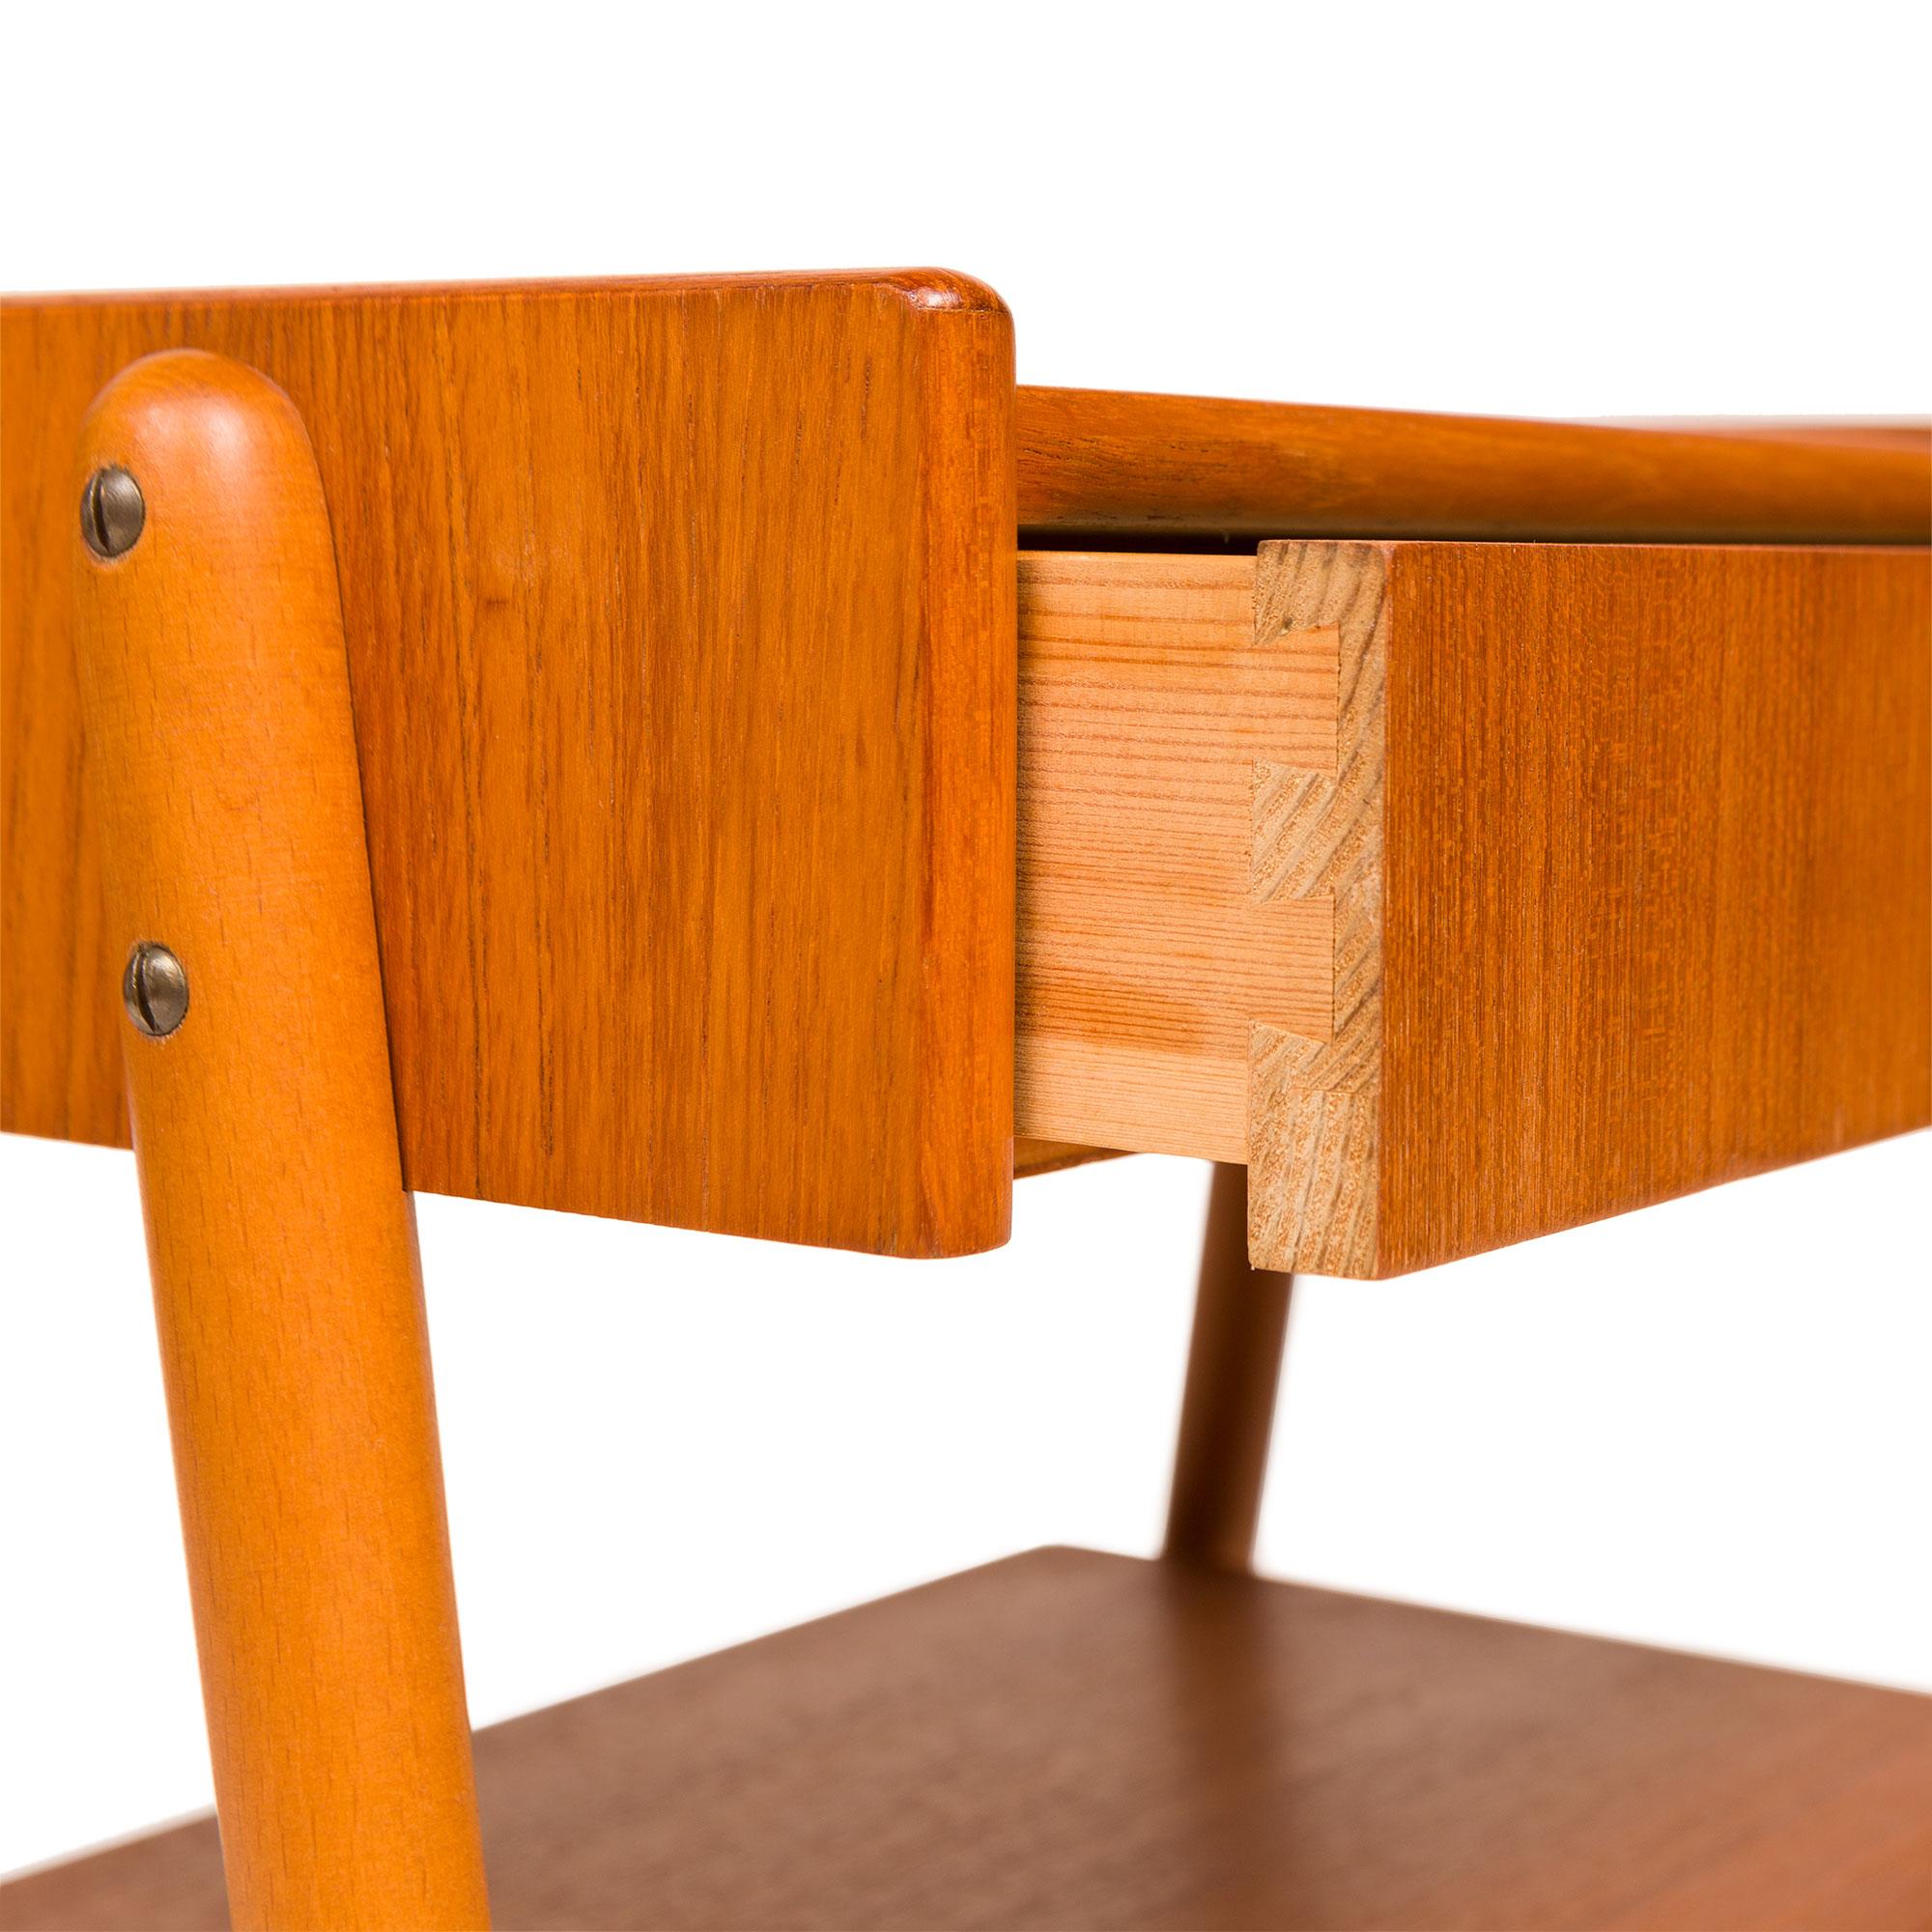 Vintage Danish Mid-Century Teak & Oak Nightstands Bedside Tables Pair For Sale 4